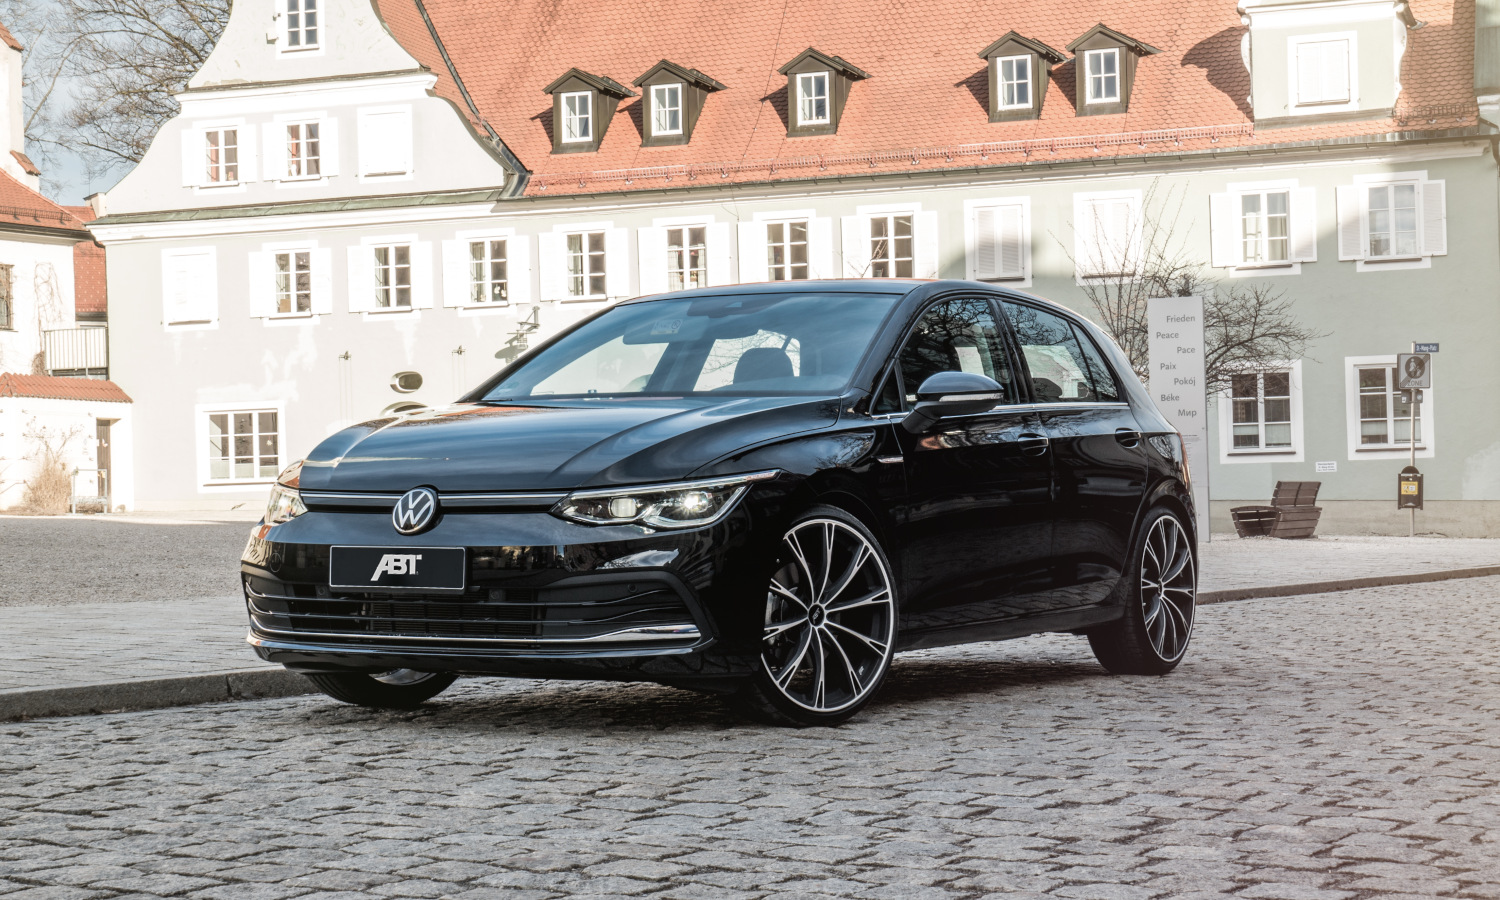 VW Golf - Audi Tuning, VW Tuning, Chiptuning von ABT Sportsline.